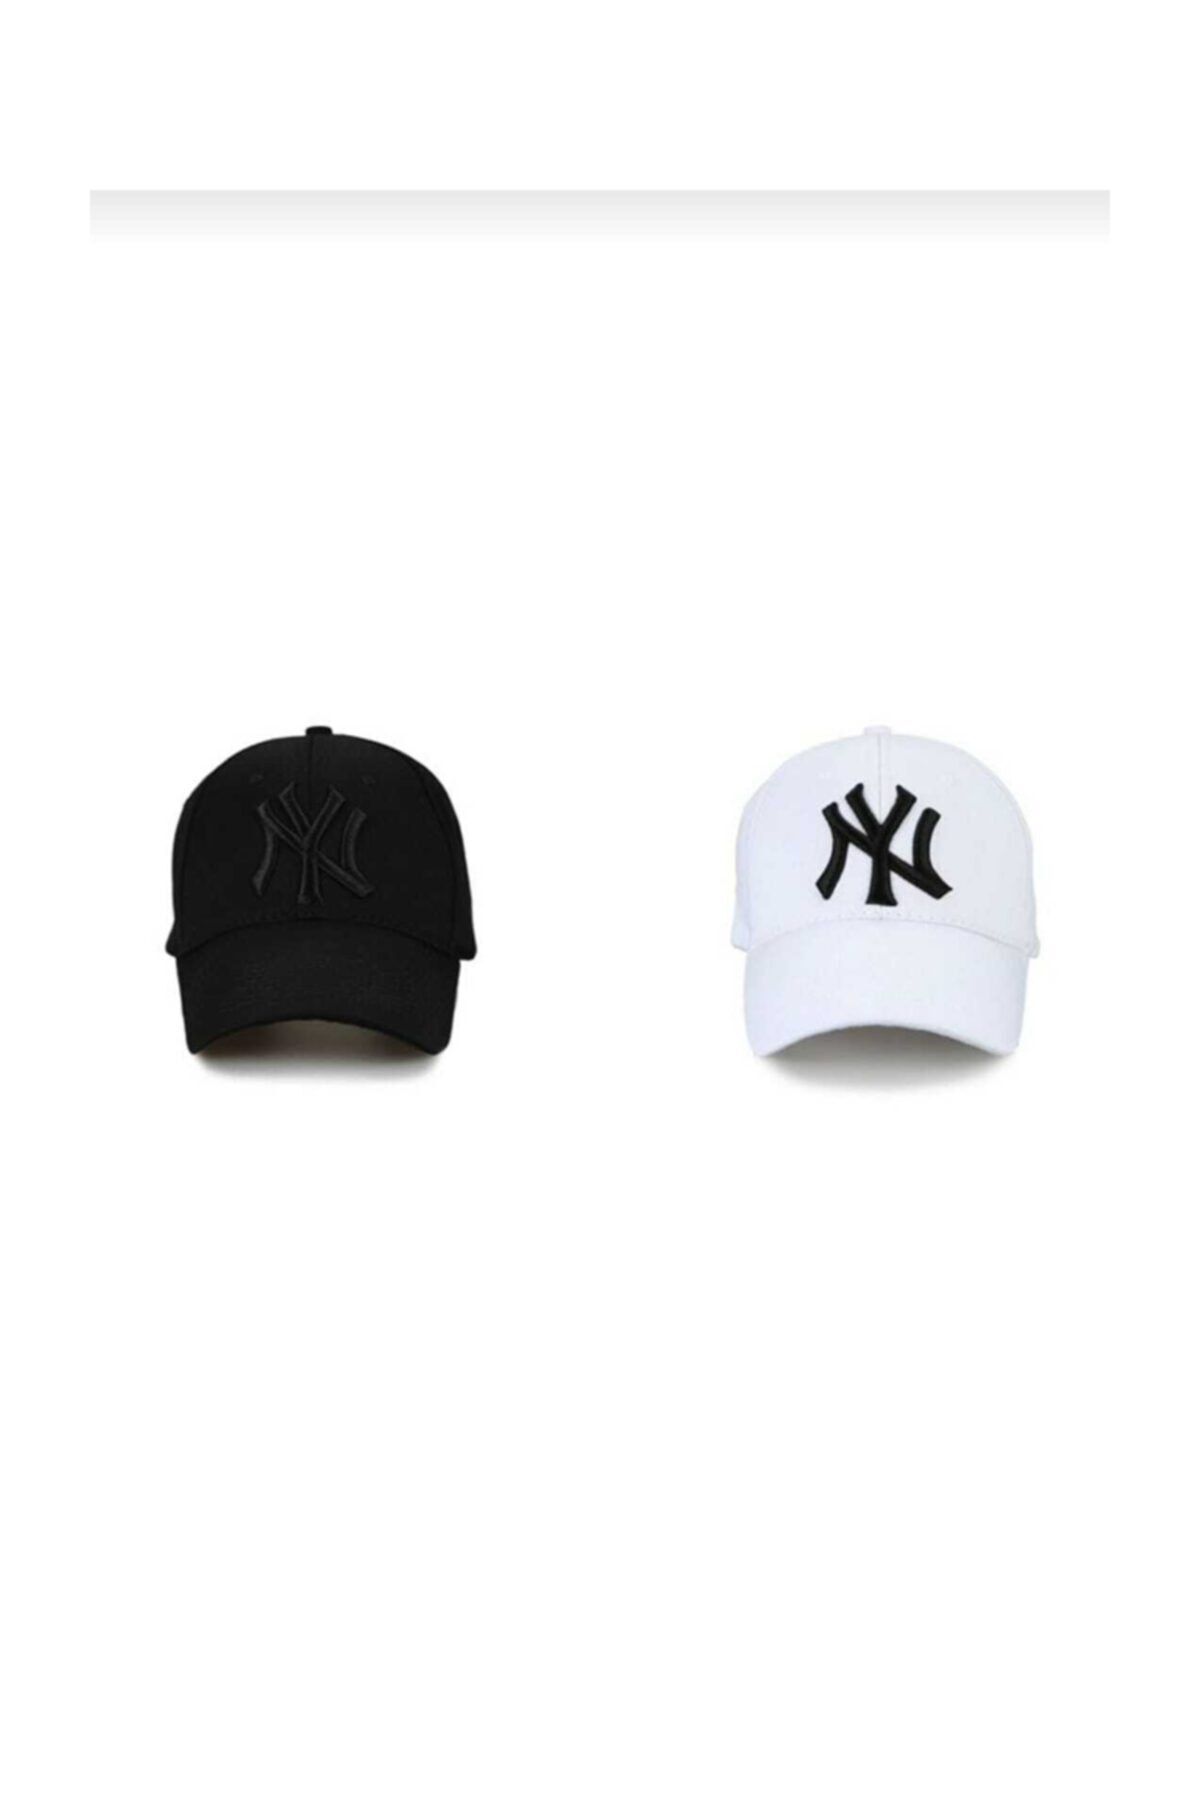 CosmoOutlet Ny New York Unisex 2'li Set Şapka [siyah-beyaz] Cosmo1013out